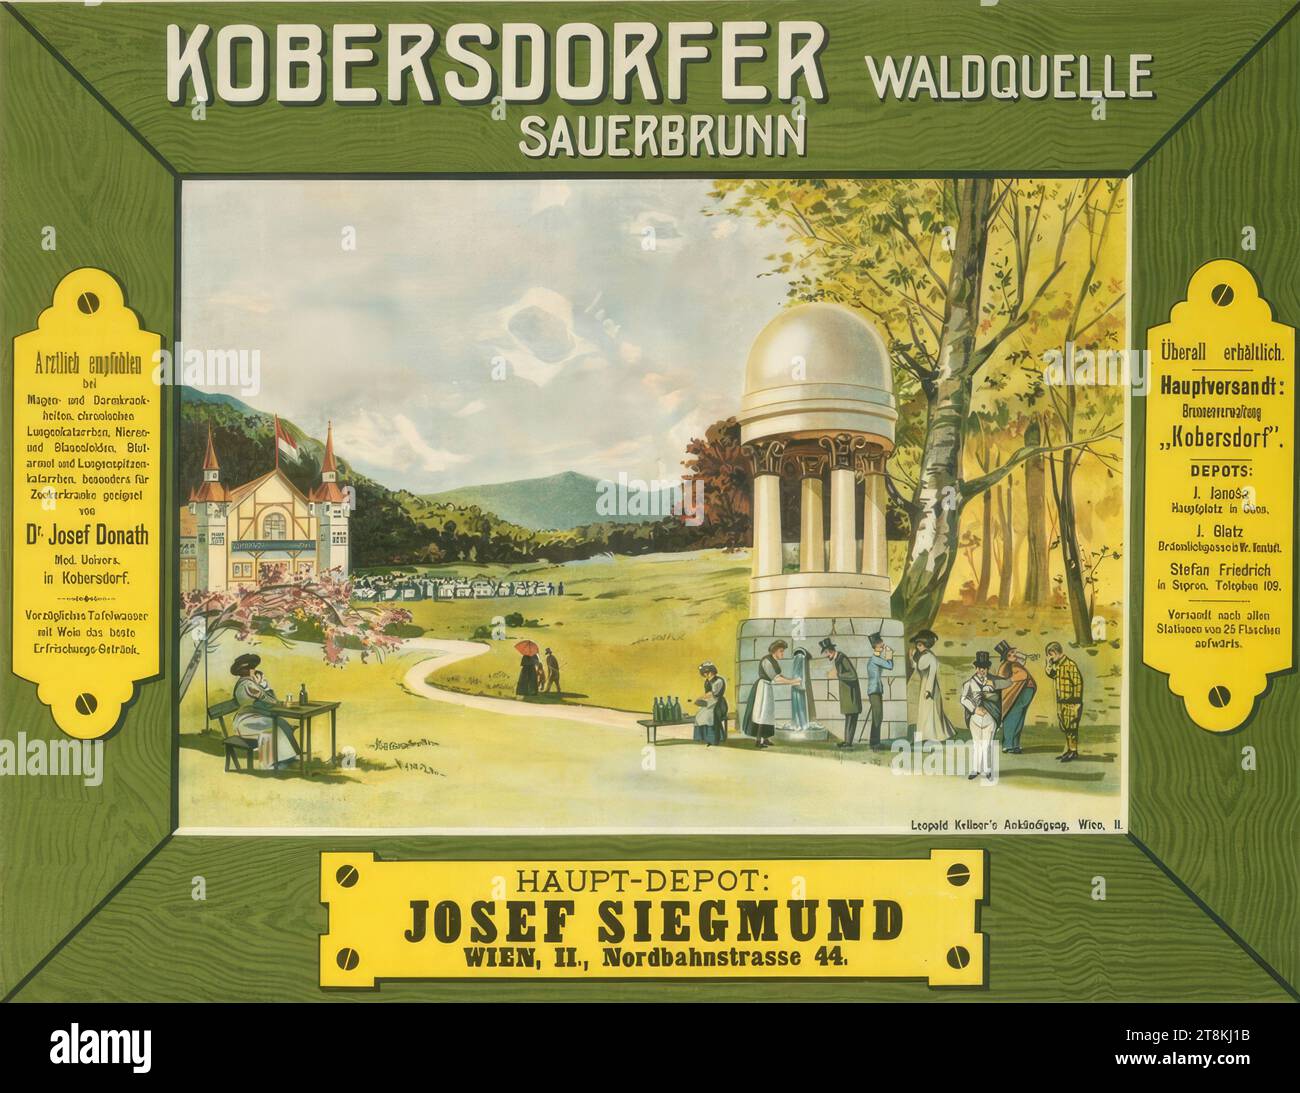 KOBERSDORFER FOREST SOURCE SAUERBRUNN; MAIN DEPOT: JOSEF SIEGMUND, VIENNA, II, NORDBAHNSTRASSE 44., ANONYMOUS, intorno al 1900, stampa, litografia a colori, foglio: 630 mm x 775 mm, Austria Foto Stock